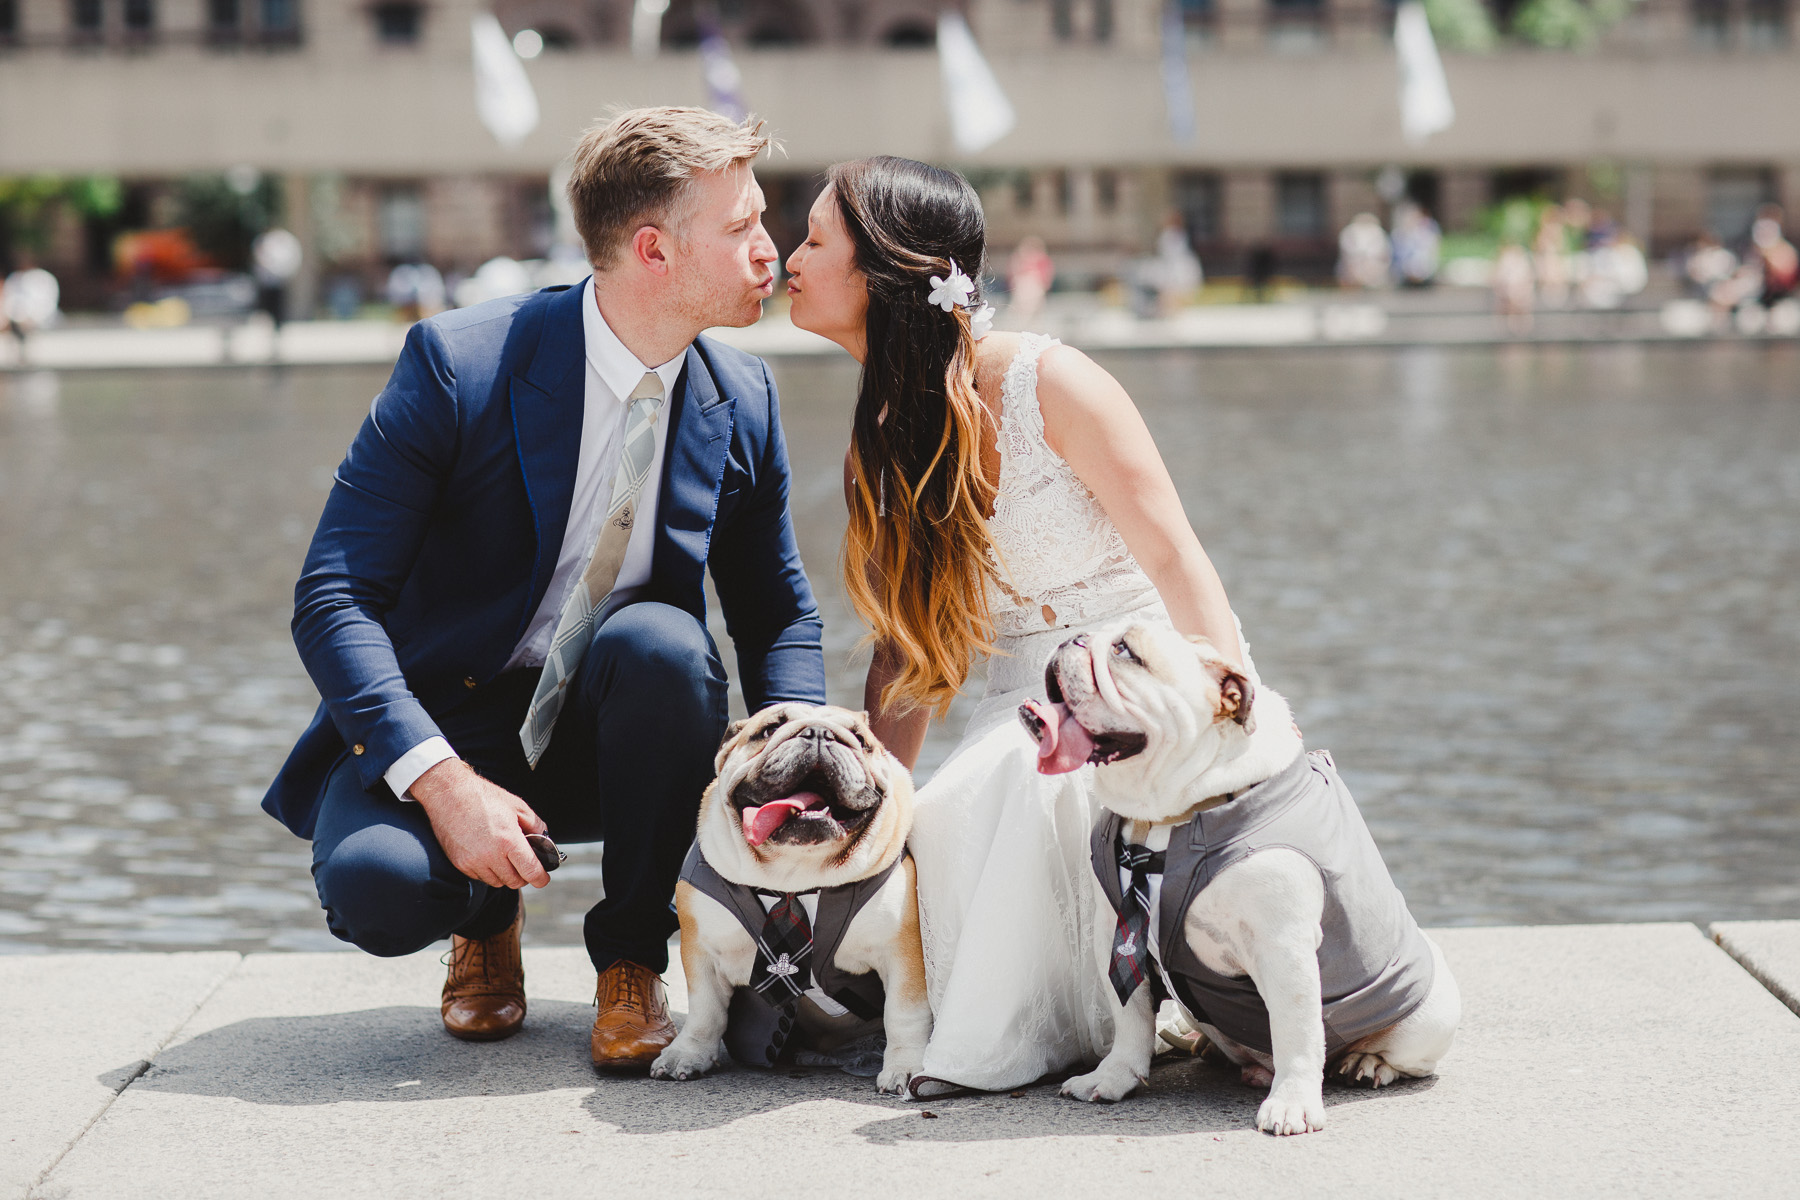 Avangard-Photography-Toronto-Wedding-A Comprehensive Guide to Choosing the Perfect Wedding Photographer